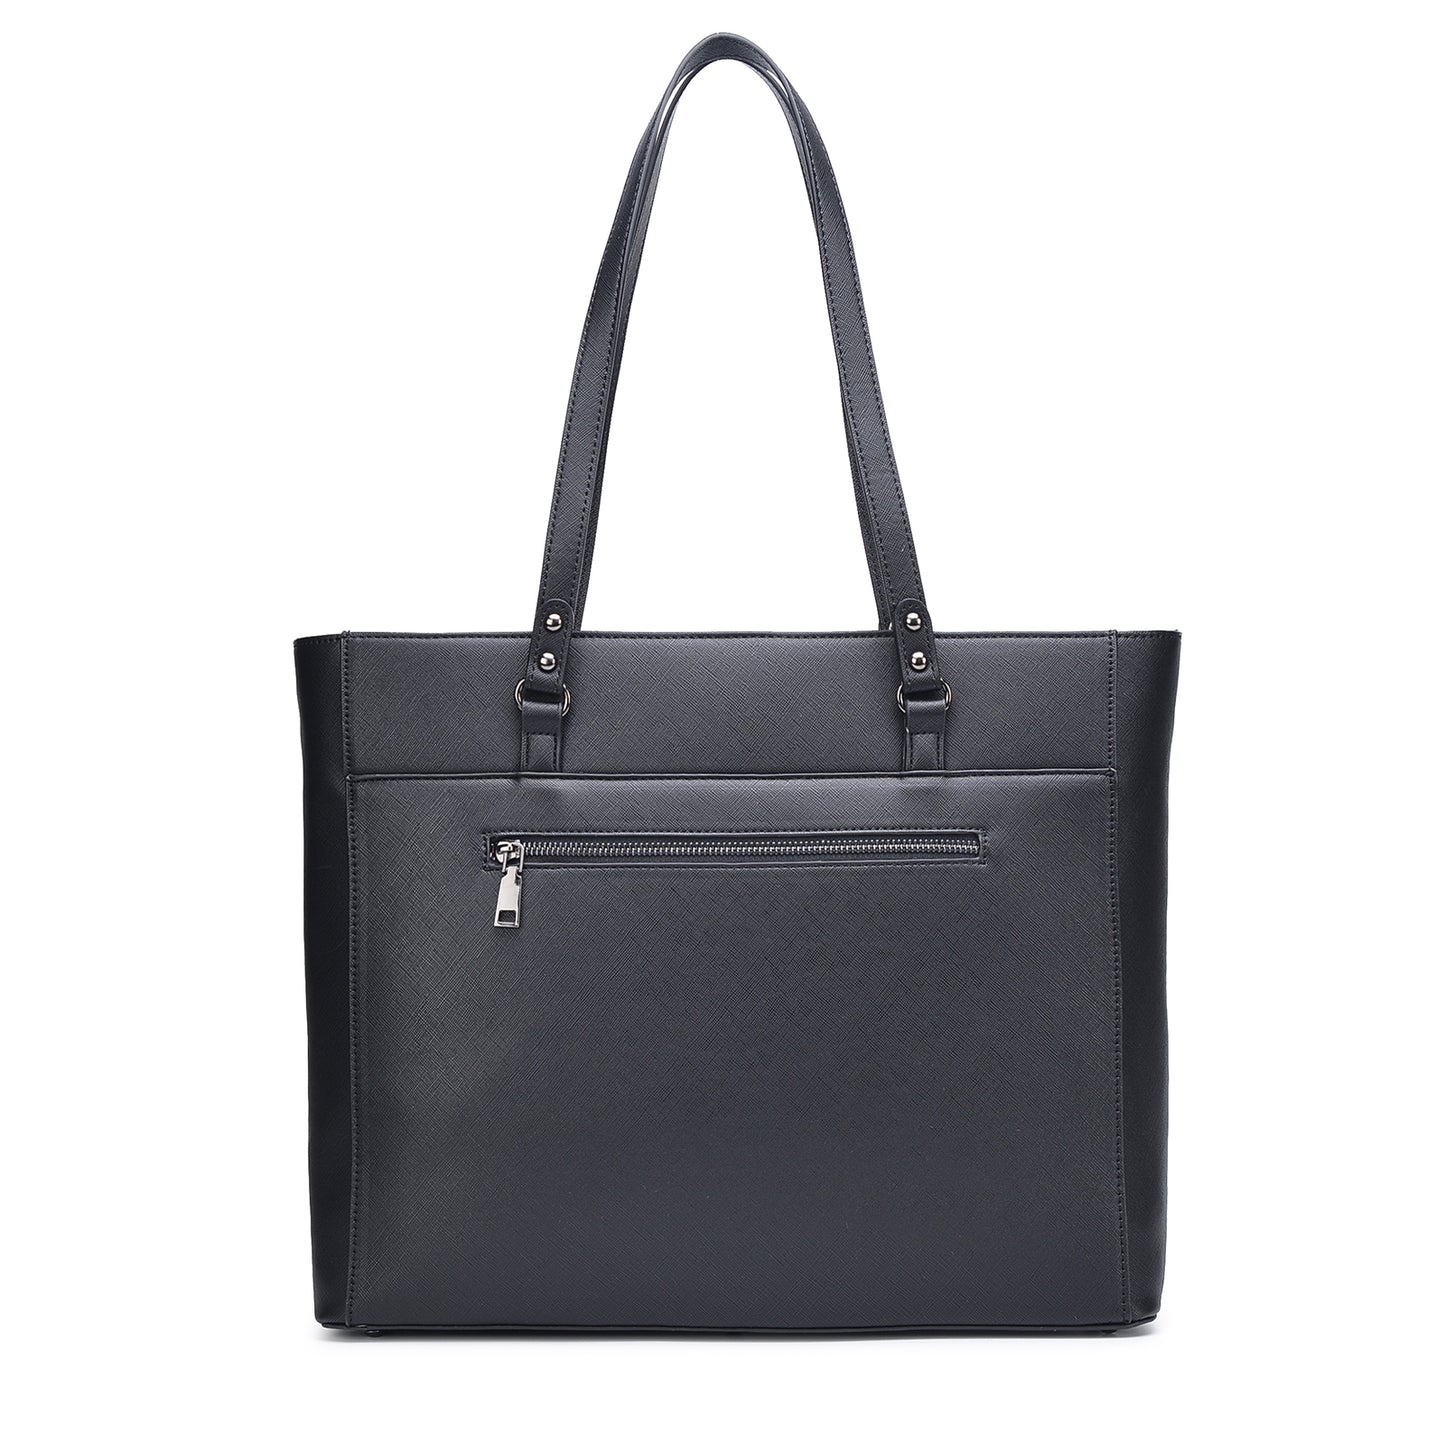 OSOCE T1 Womens Handbag Leather Tote Bag